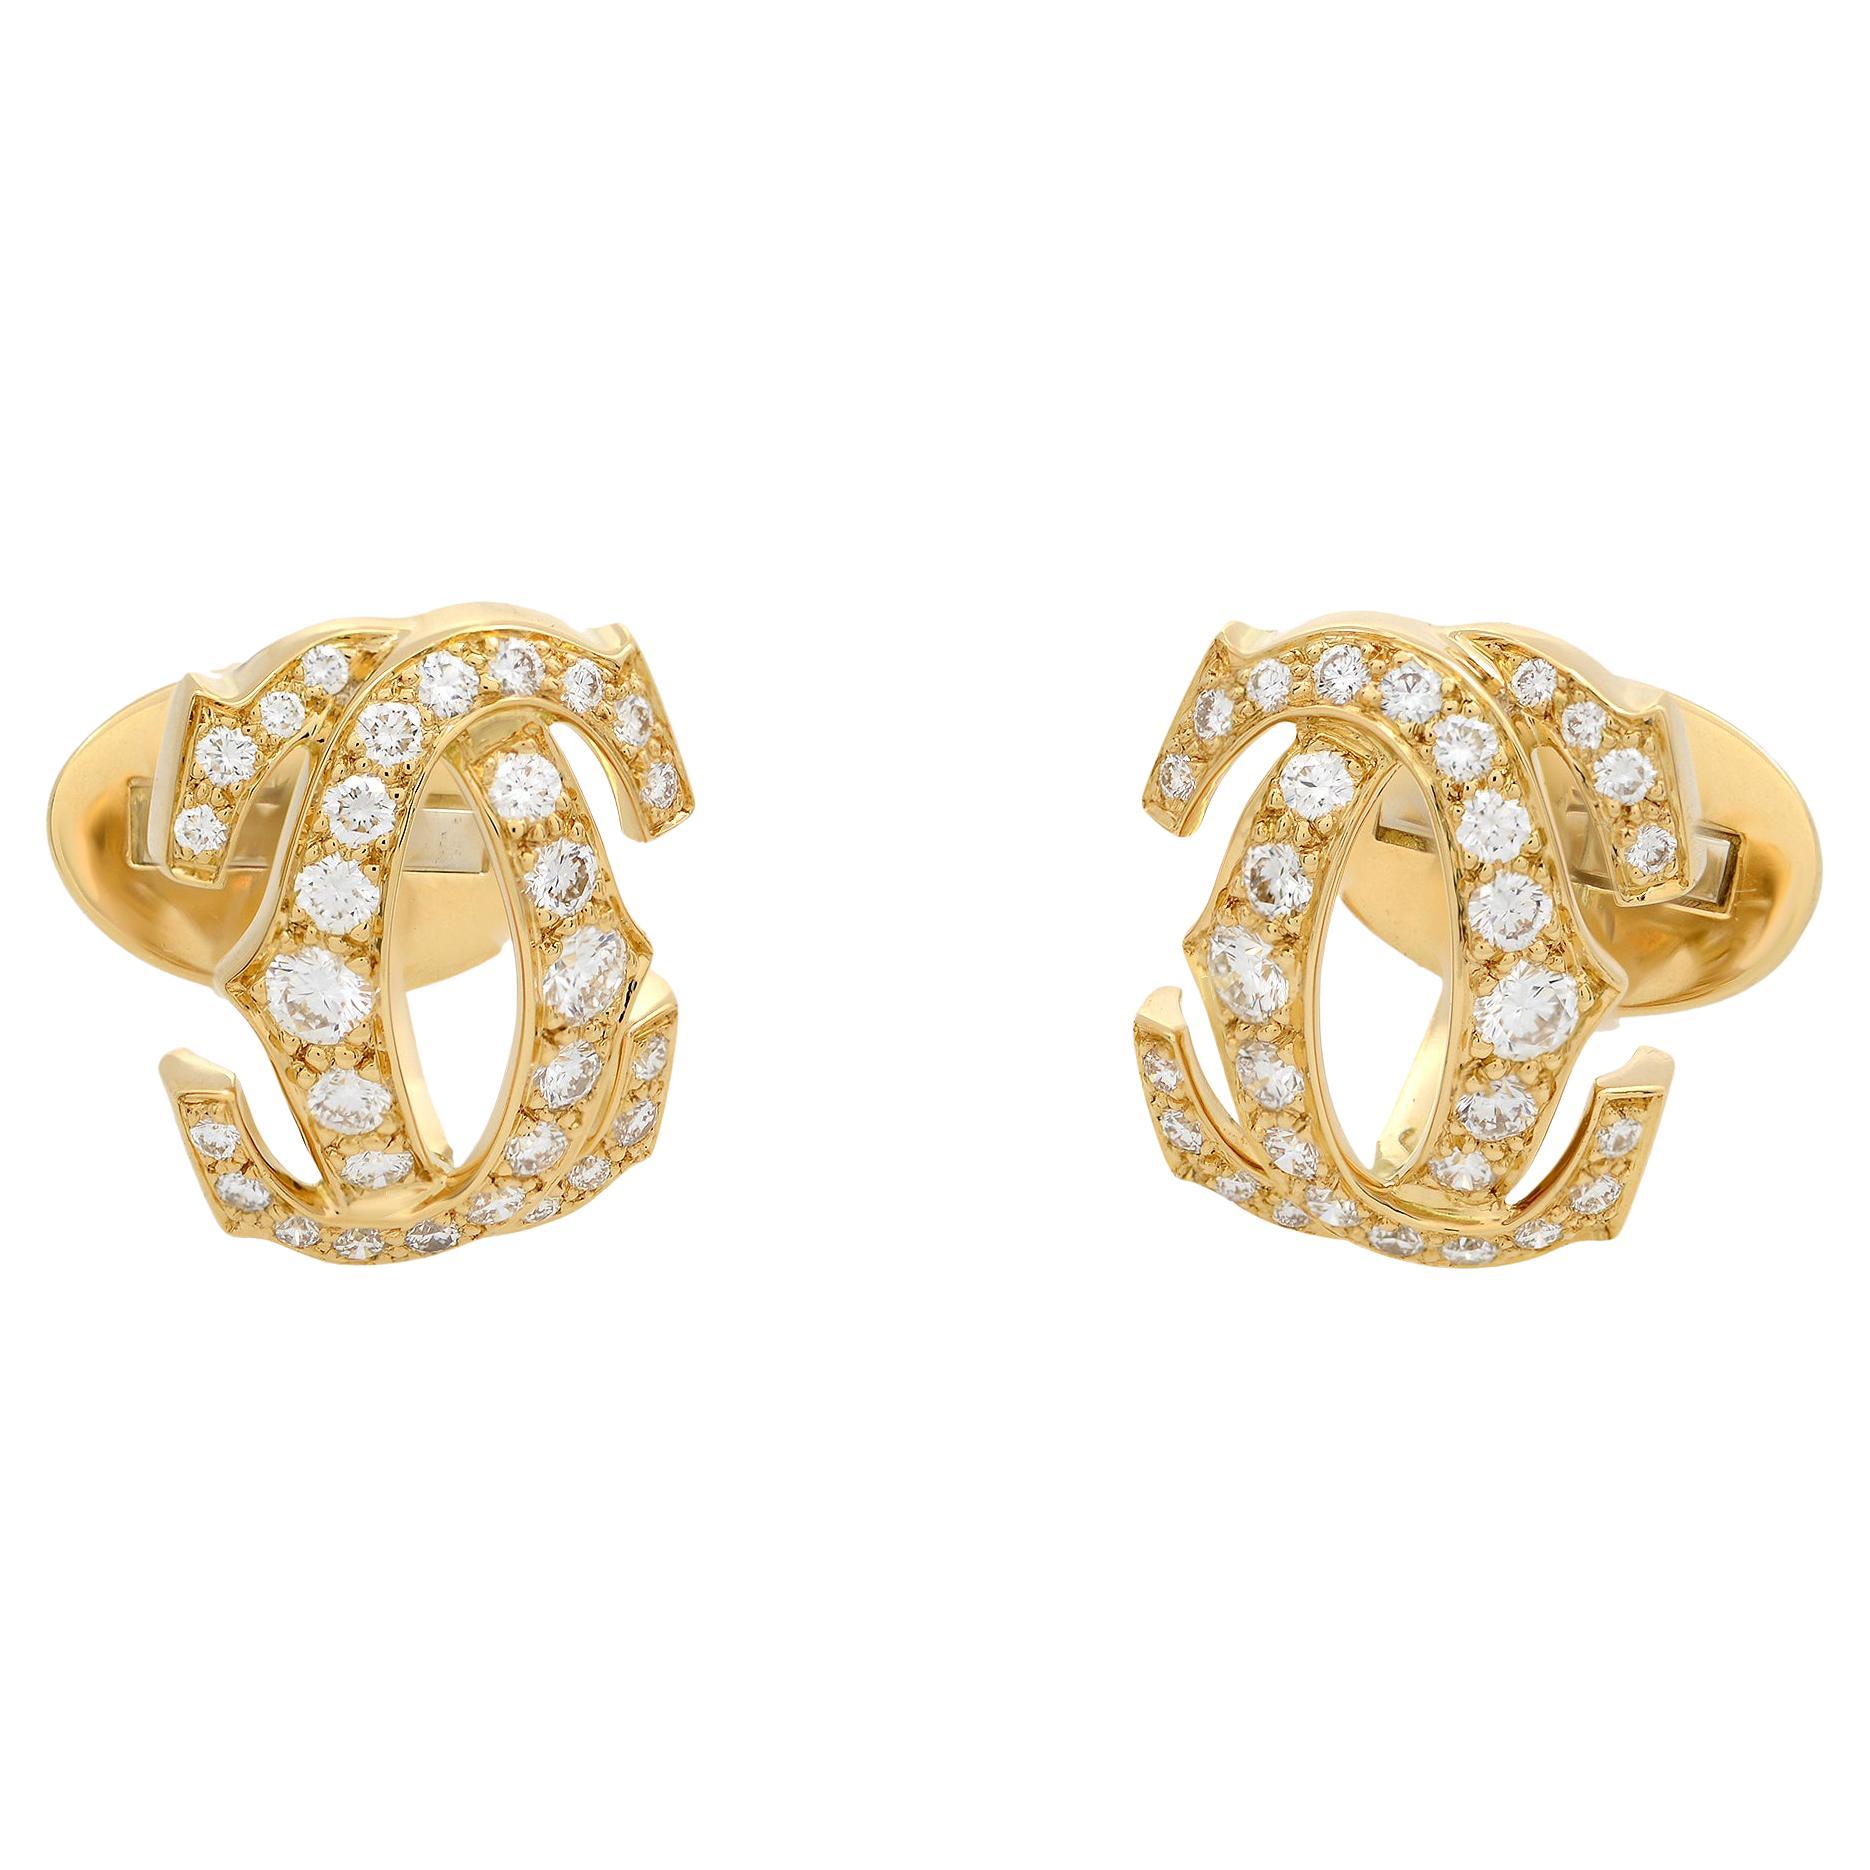 Cartier 18K Yellow Gold Penelope Double C Diamond Cufflinks 1.50Cttw